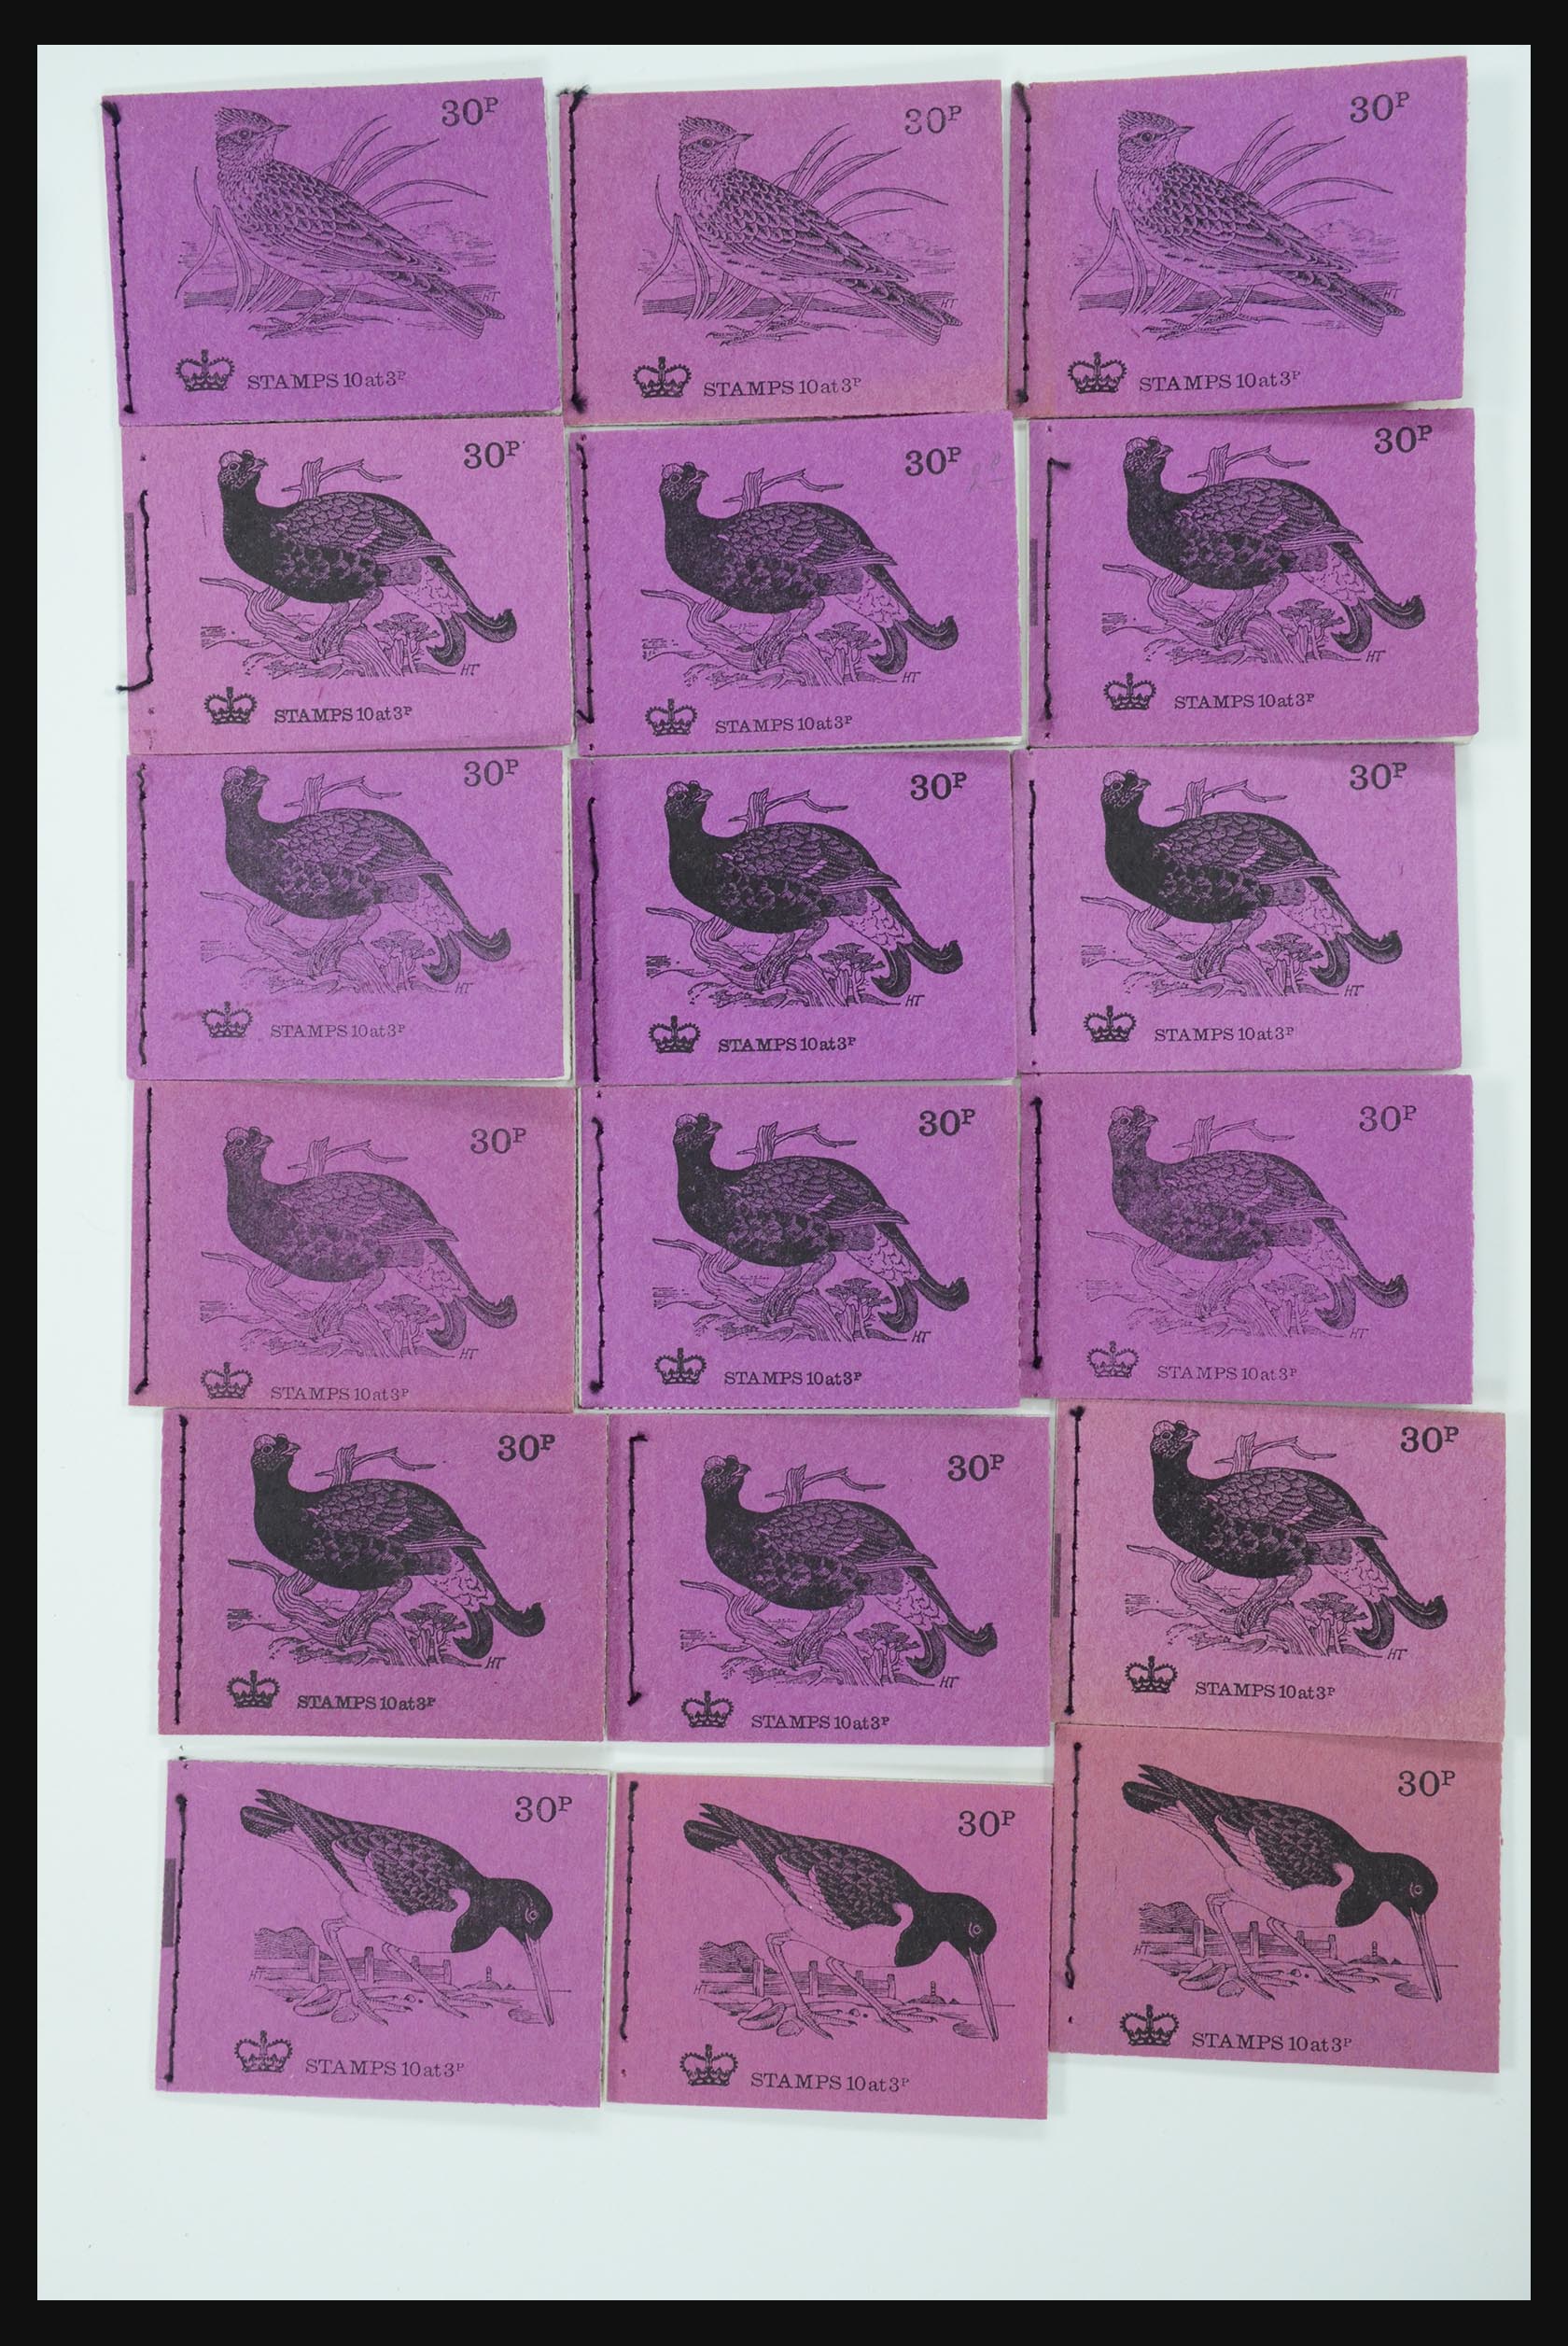 31961 017 - 31961 Great Britain stampbooklets 1971-1999.